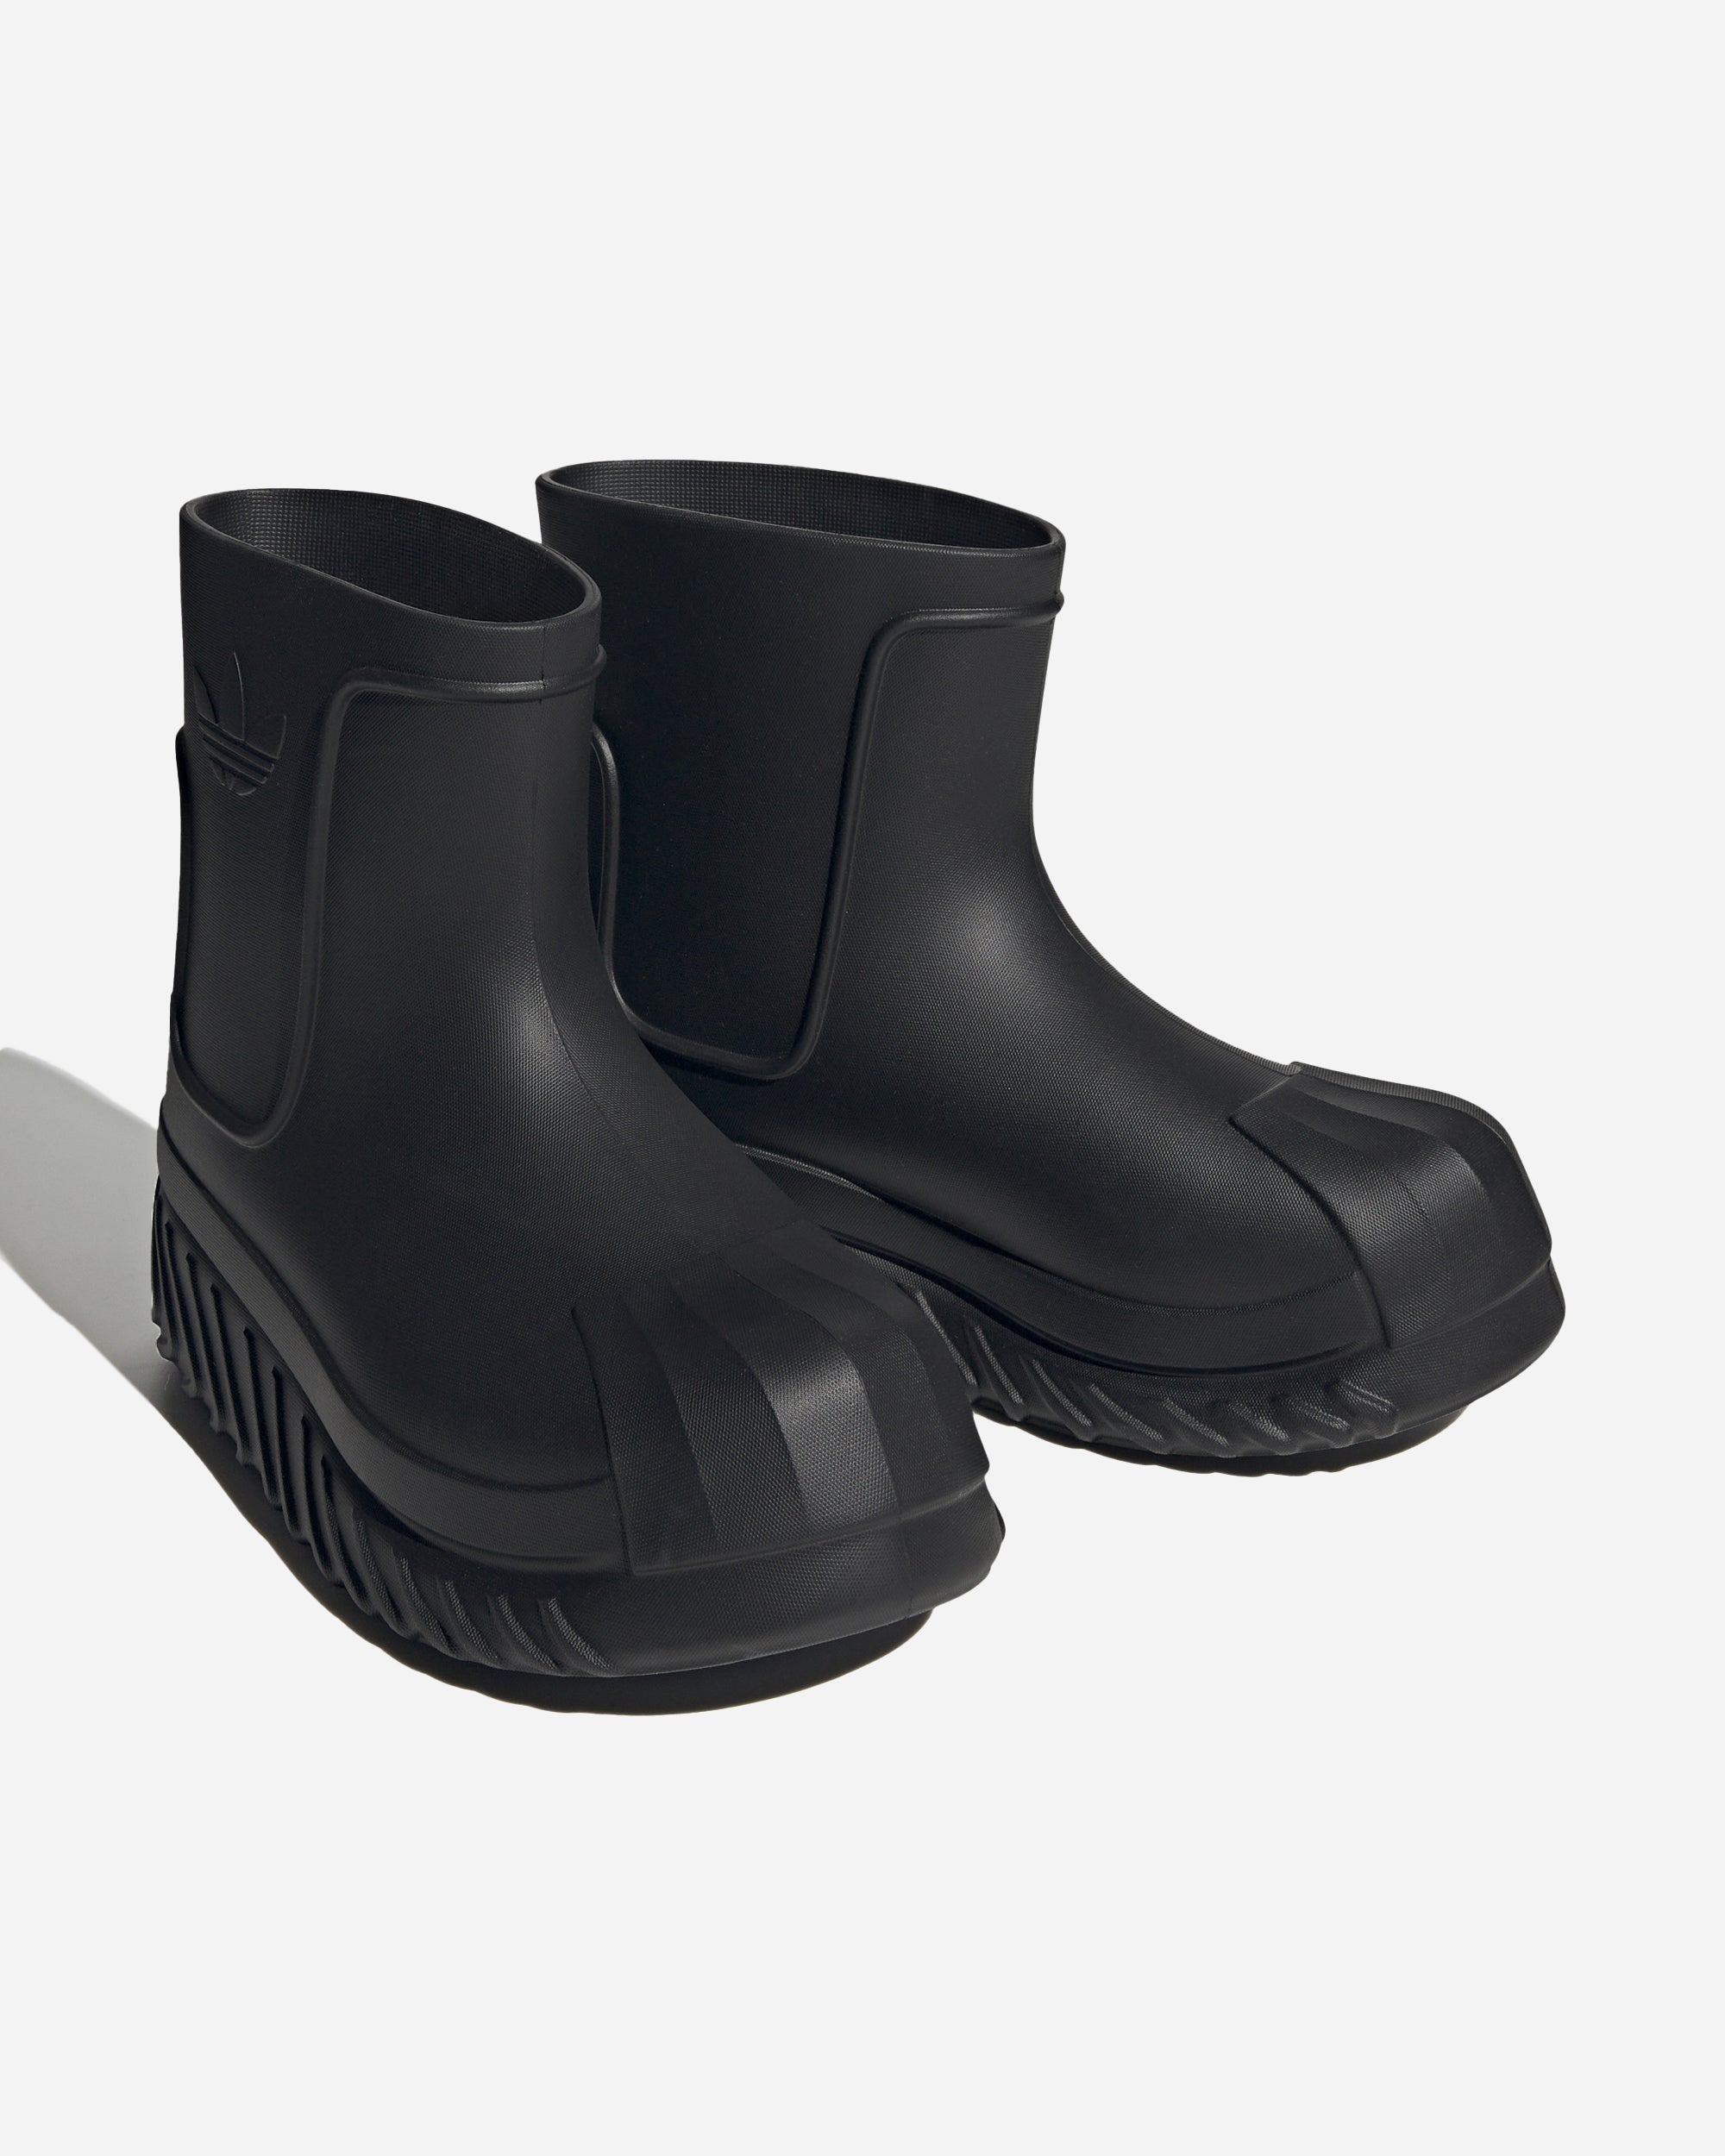 Adidas Ori adiFOM Superstar Boots CBLACK/CBLACK/GRESIX IG3029